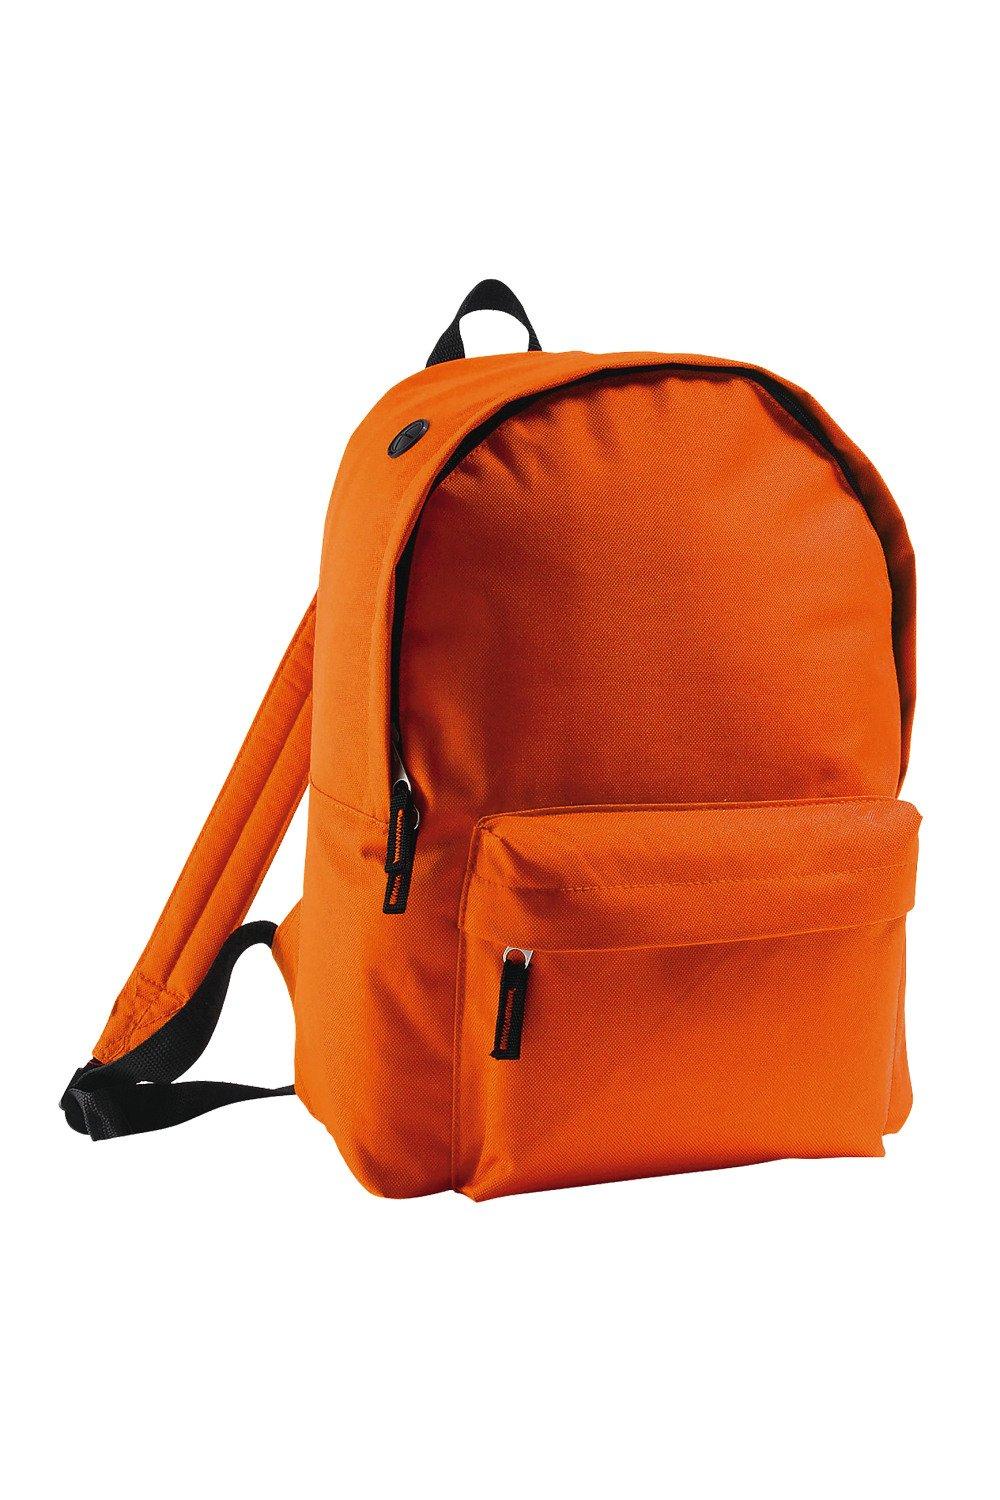 Рюкзак / сумка-рюкзак Rider SOL'S, оранжевый рюкзак сумка рюкзак rider sol s золото